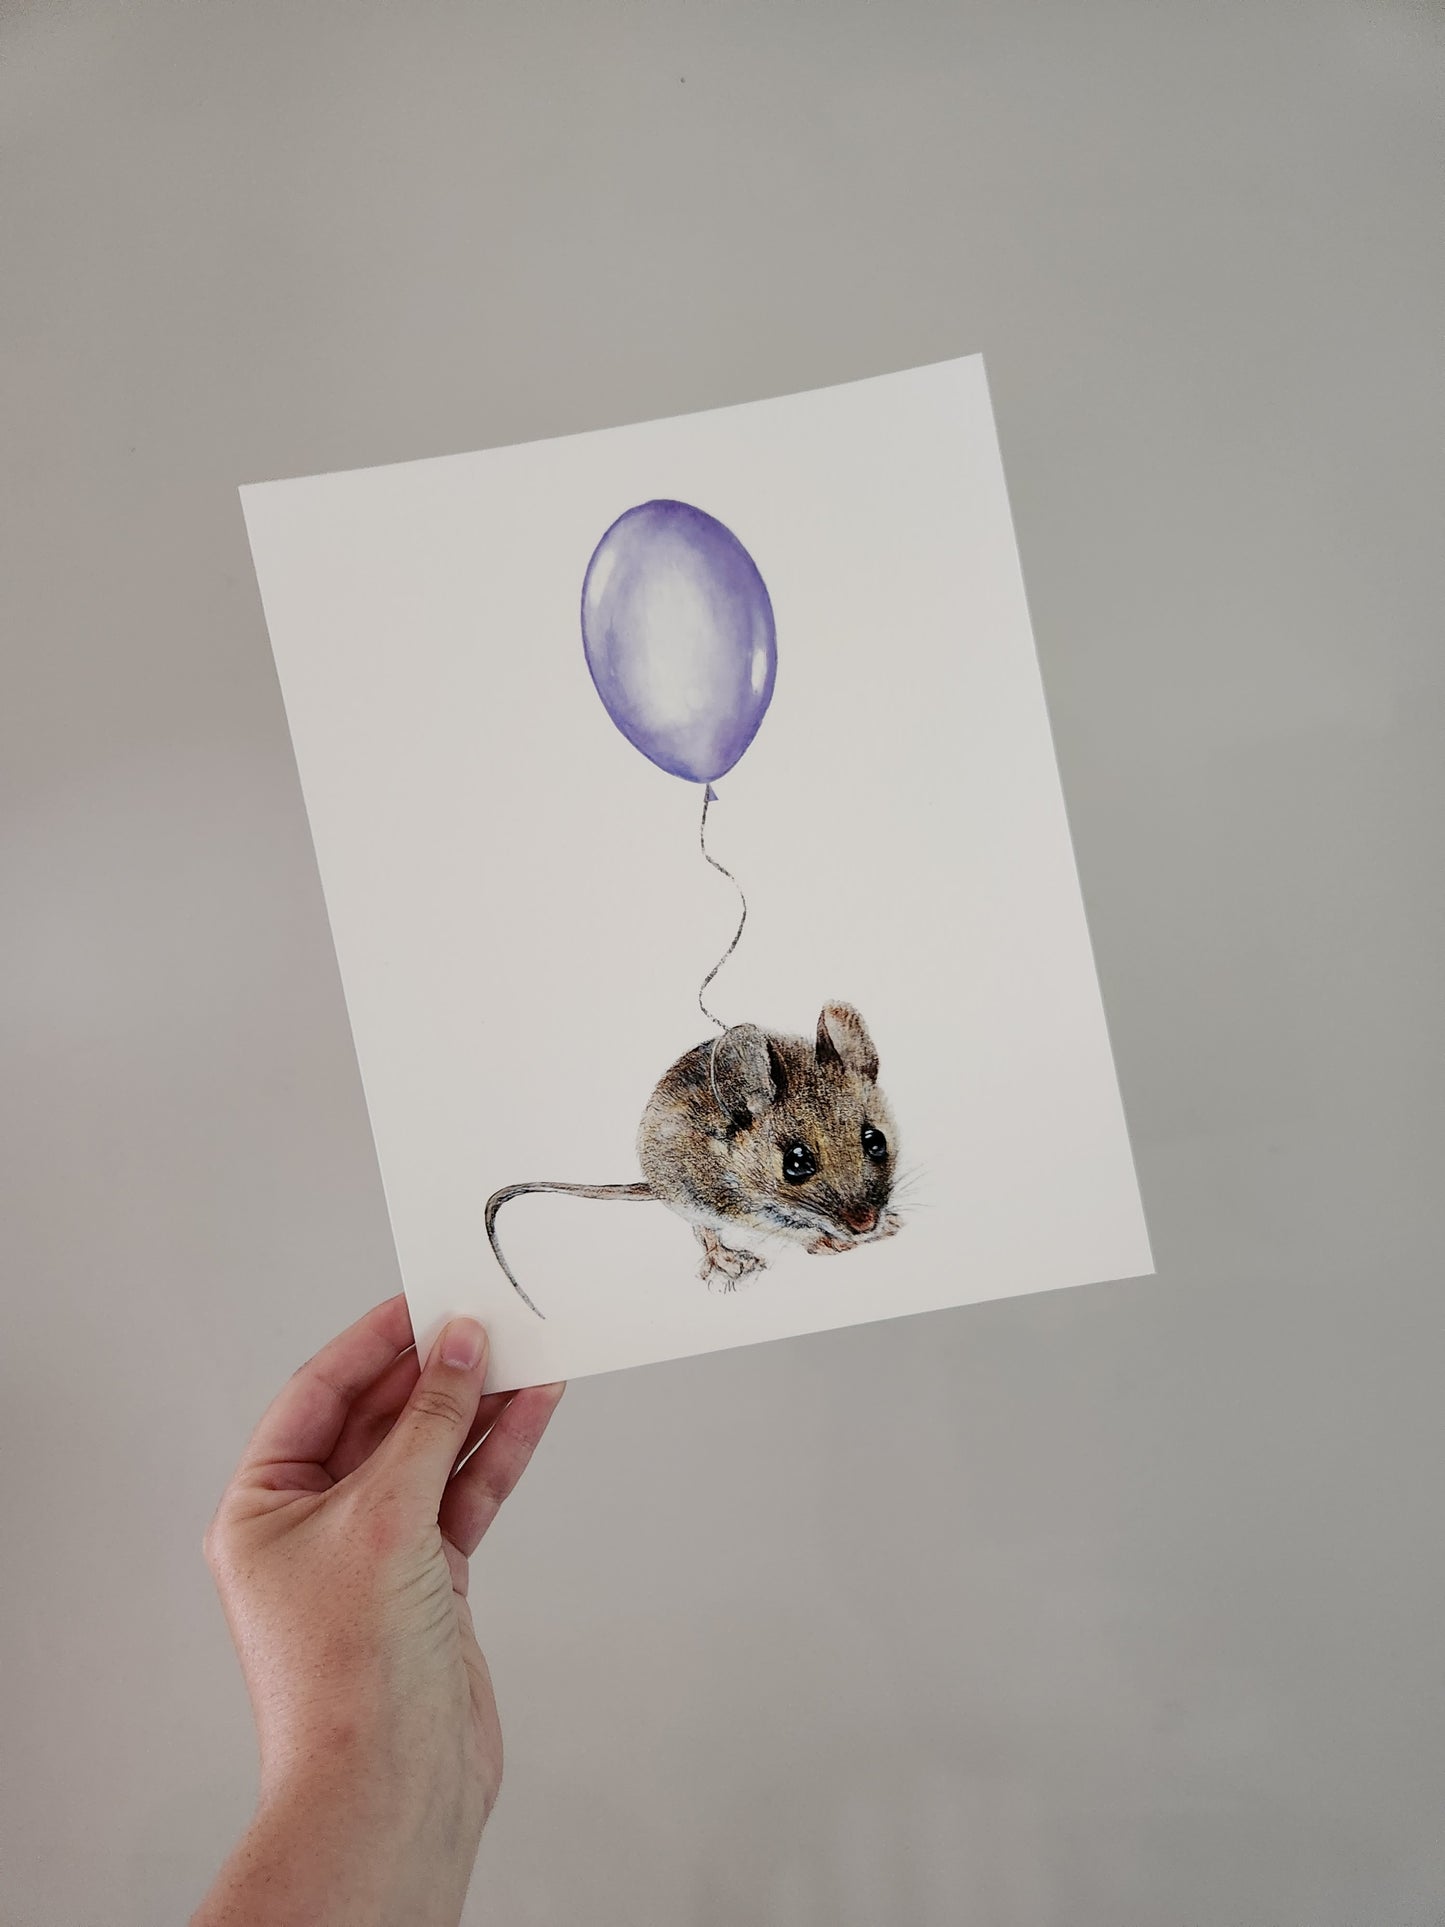 Mouse With Purple Balloon, Woodland nursery art, Giclee print on fine art paper